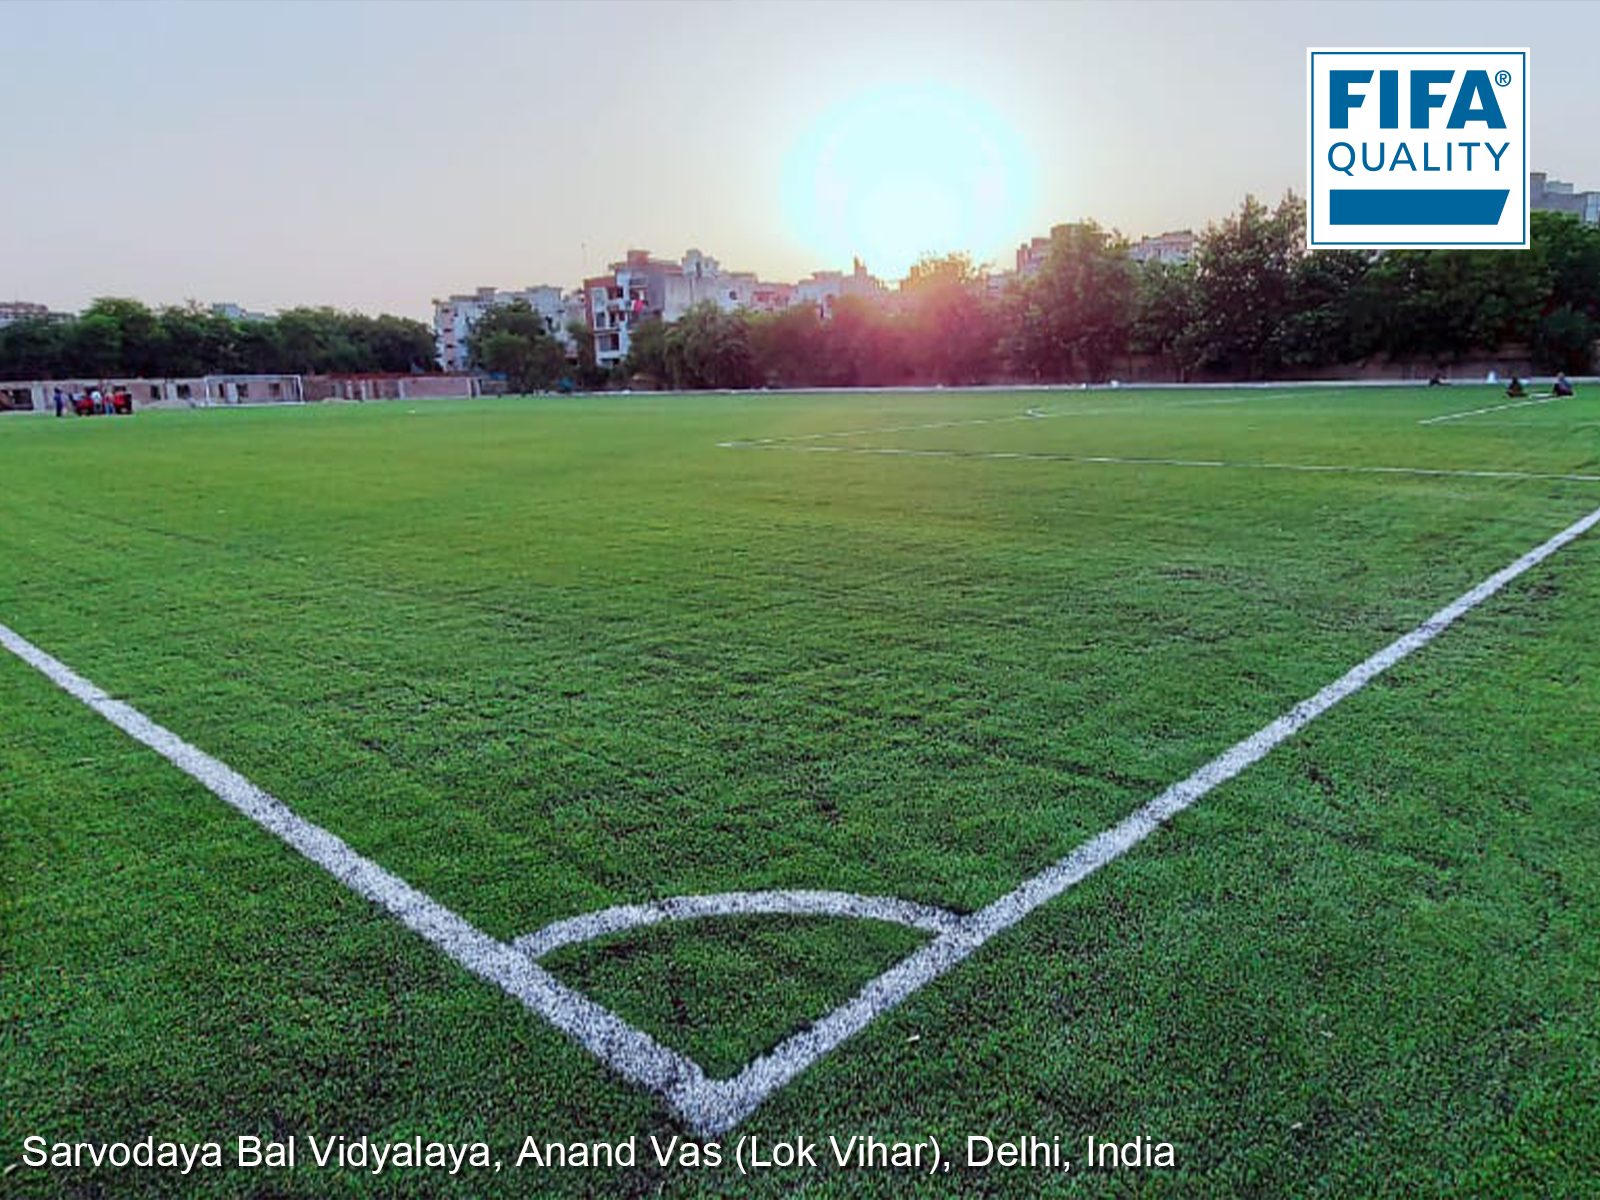 Sarvodaya Bal Vidyalaya, Anand Vas (Lok Vihar), Delhi, India, FIFA Quality pitch